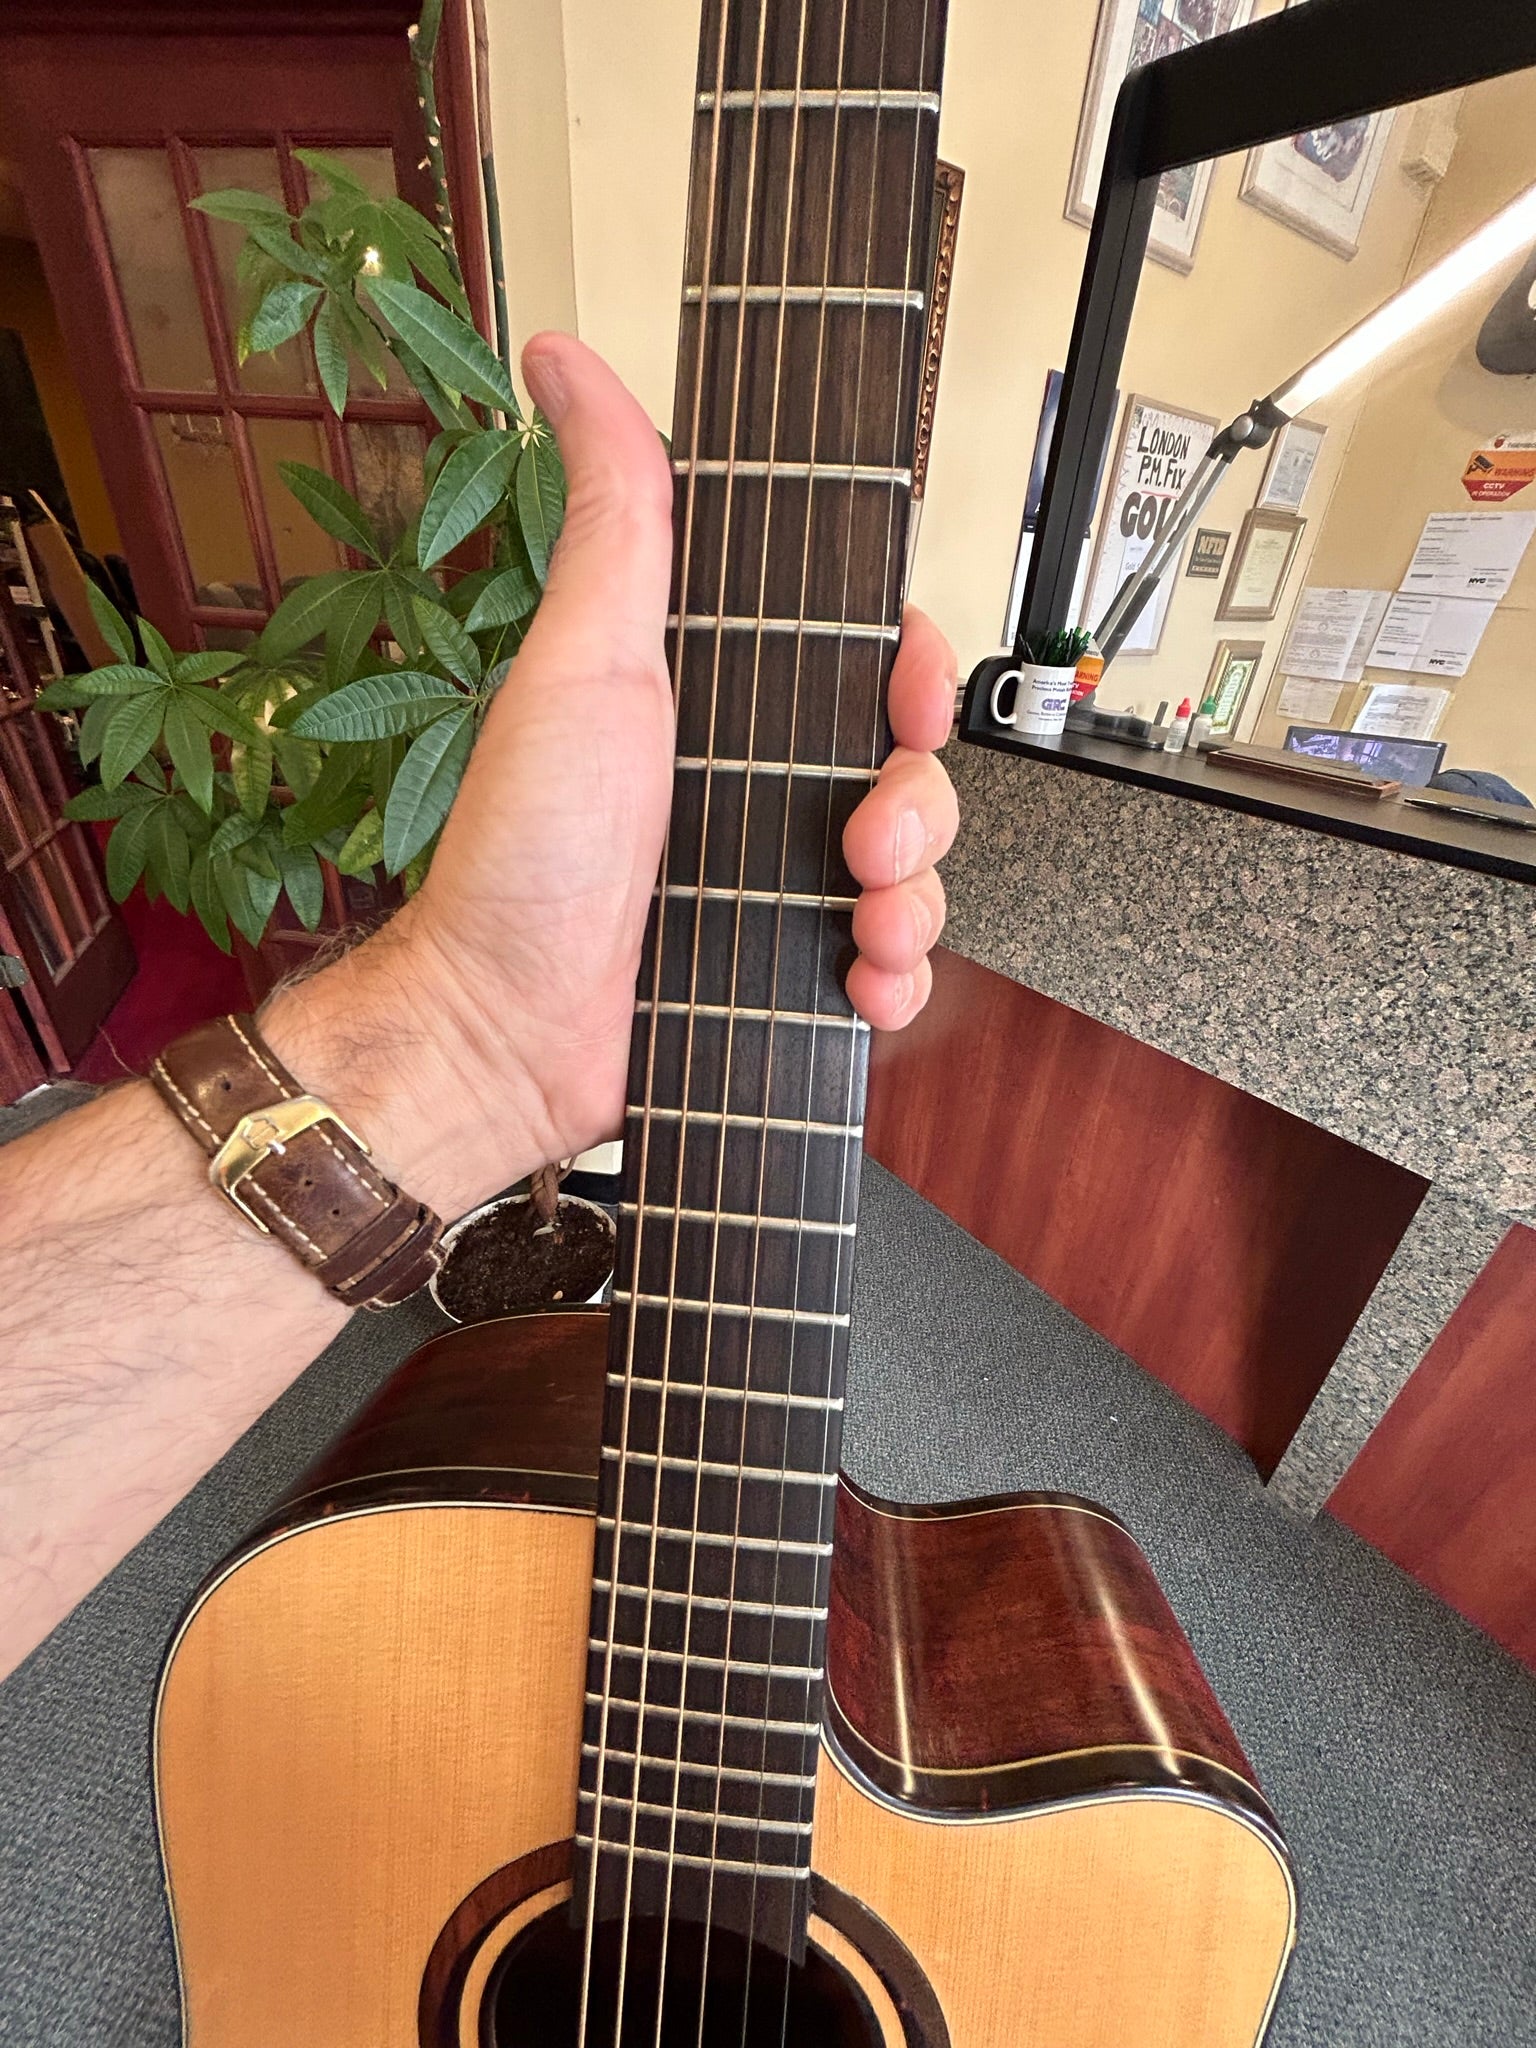 Merida Extrema Cardenas C-26-DCES Acoustic Electric Guitar